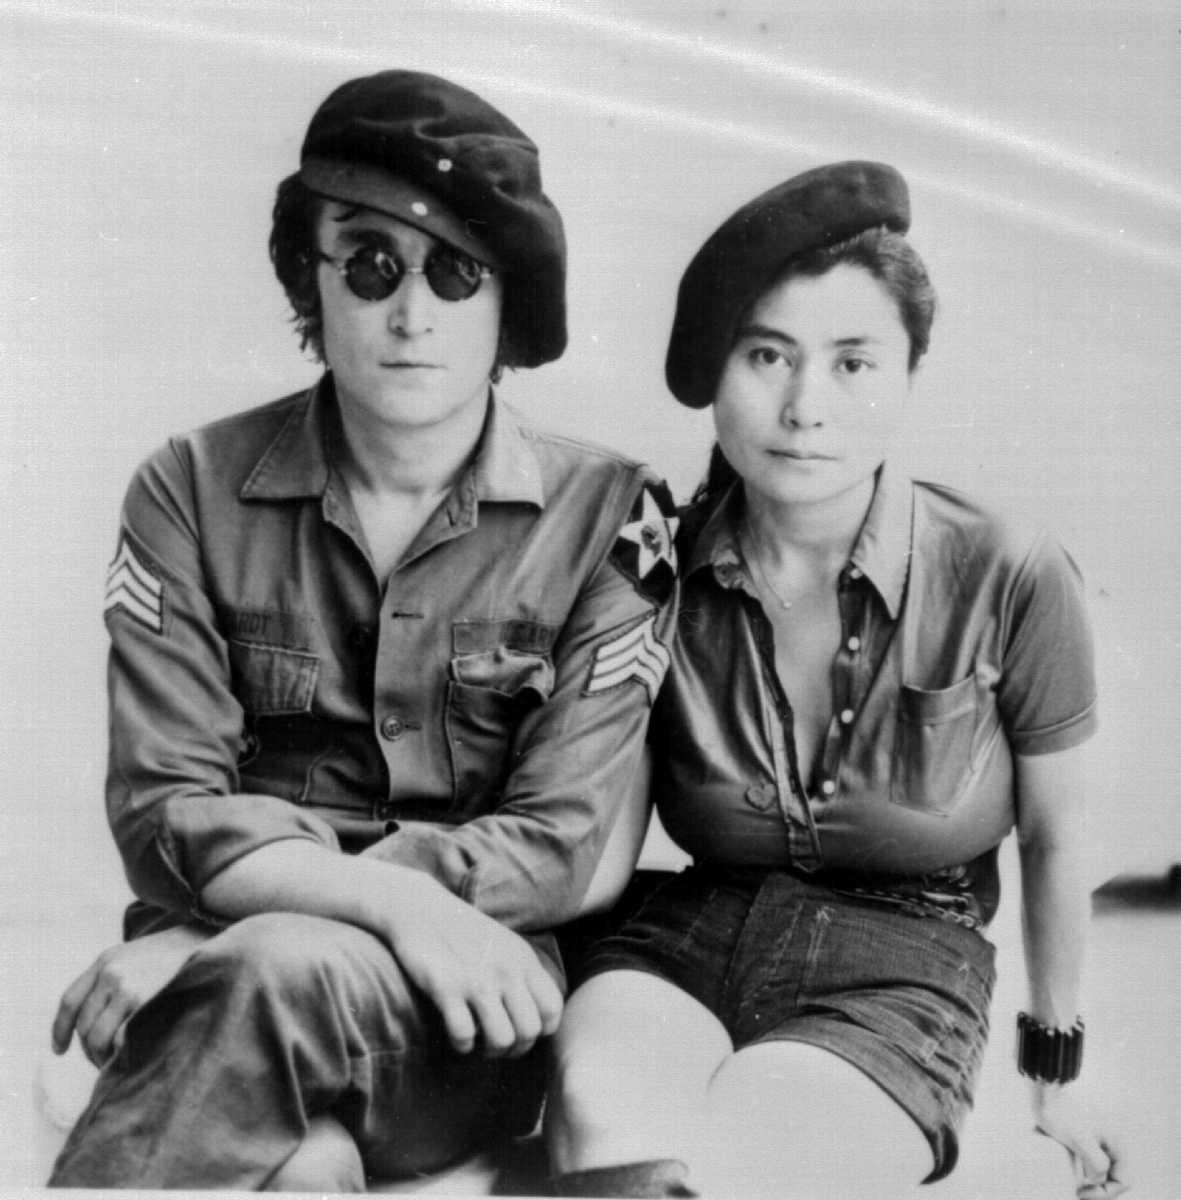 [Focus] - Joyeux anniversaire Yoko Ono !